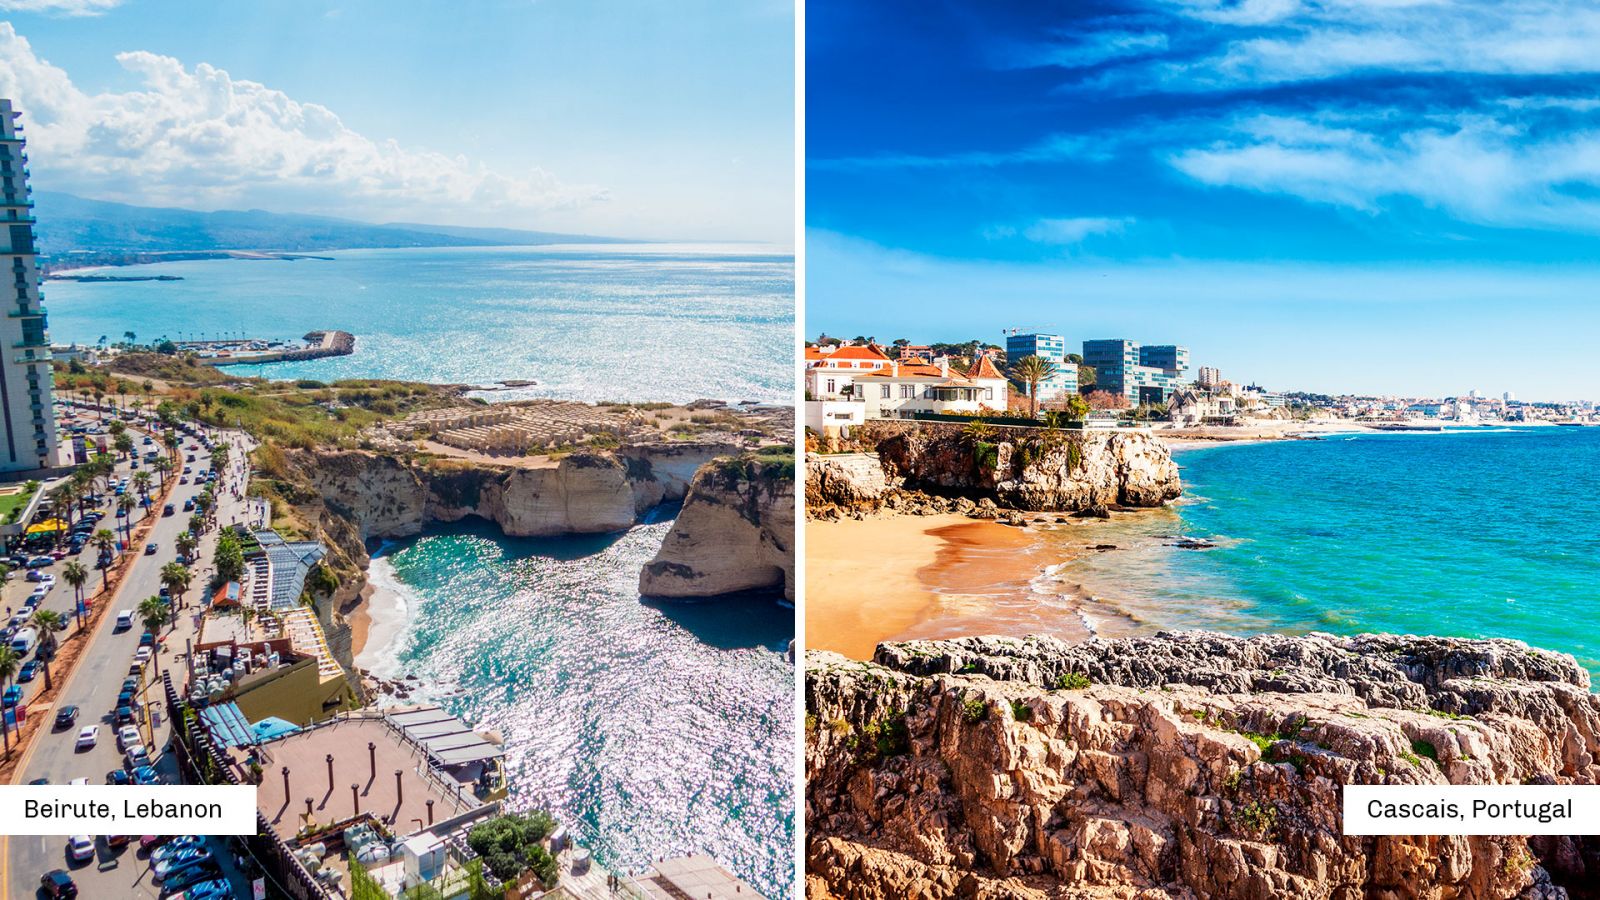 Beirut, Lebanon vs. Cascais, Portugal.